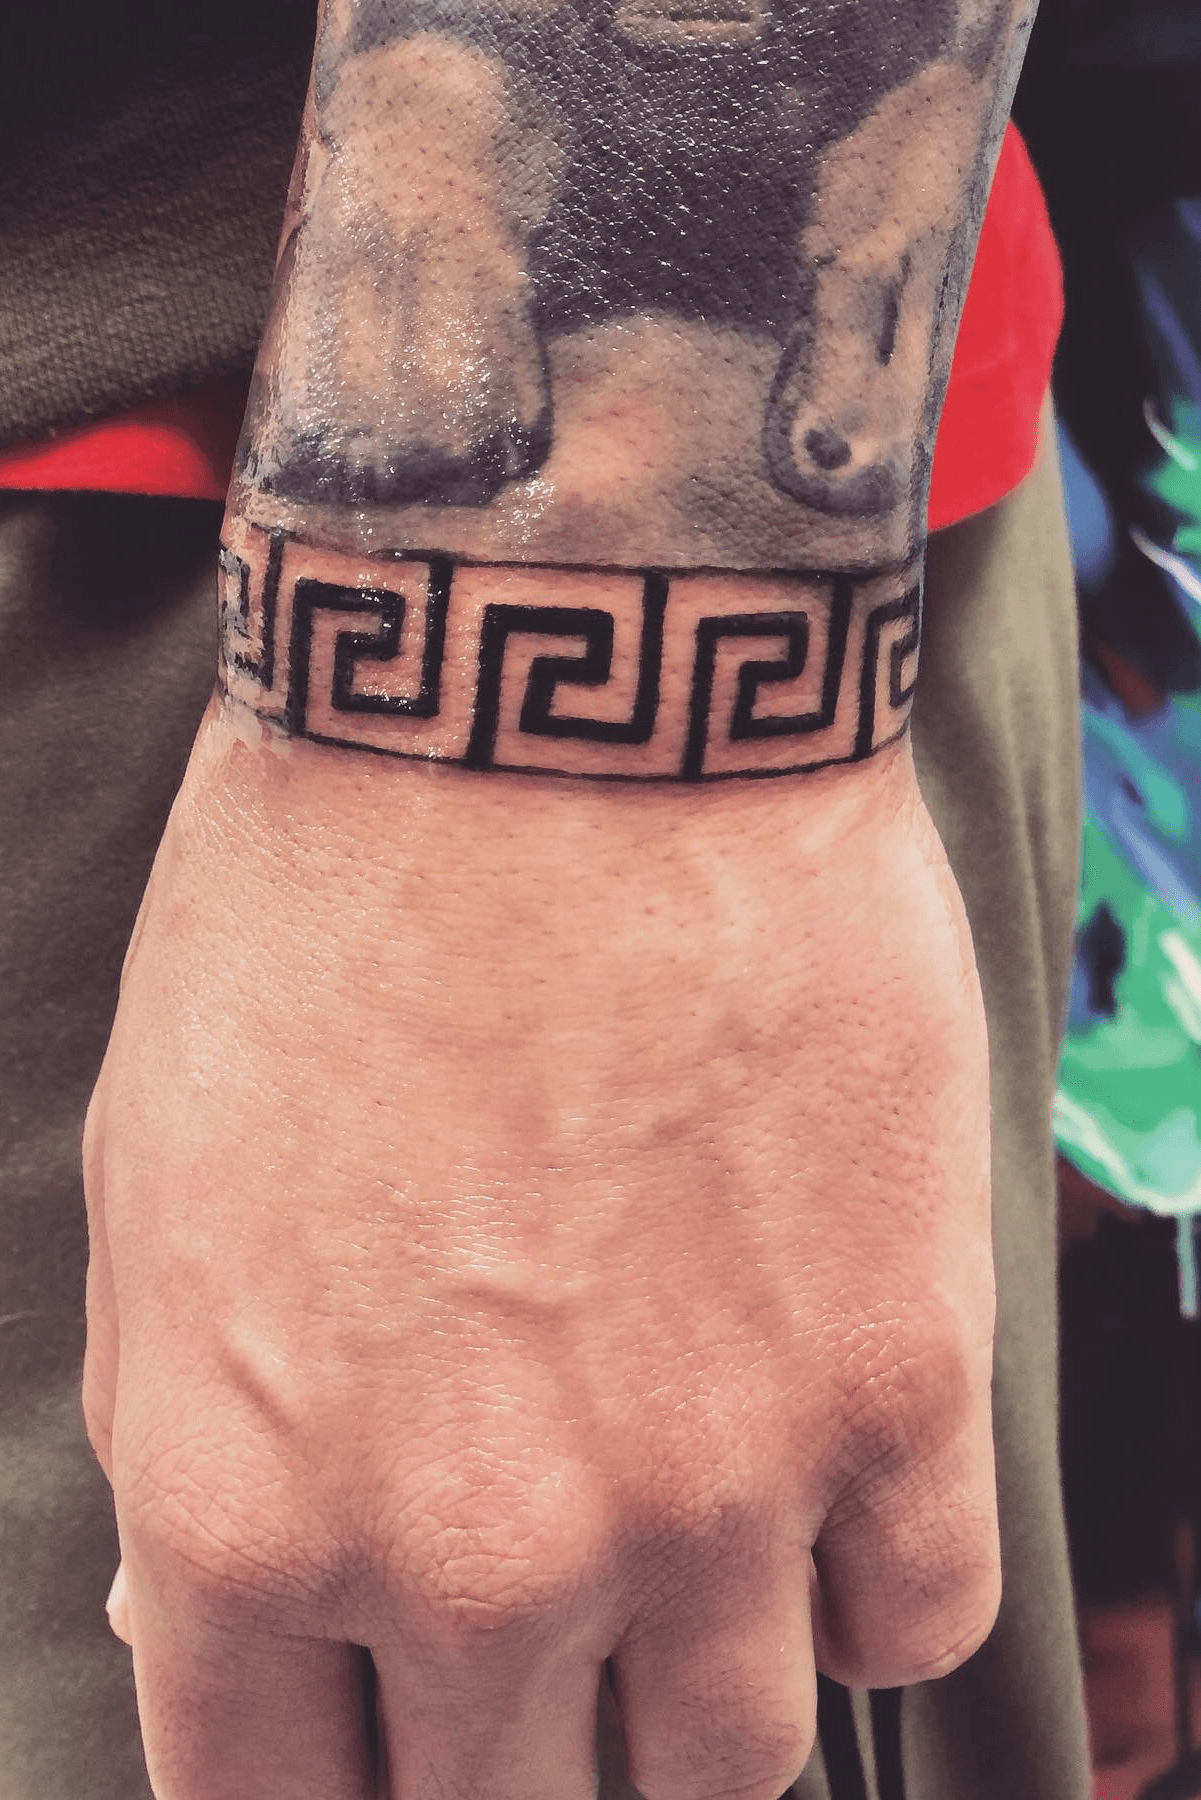 Greek arm band tattoo by TrueAngelicArt on DeviantArt